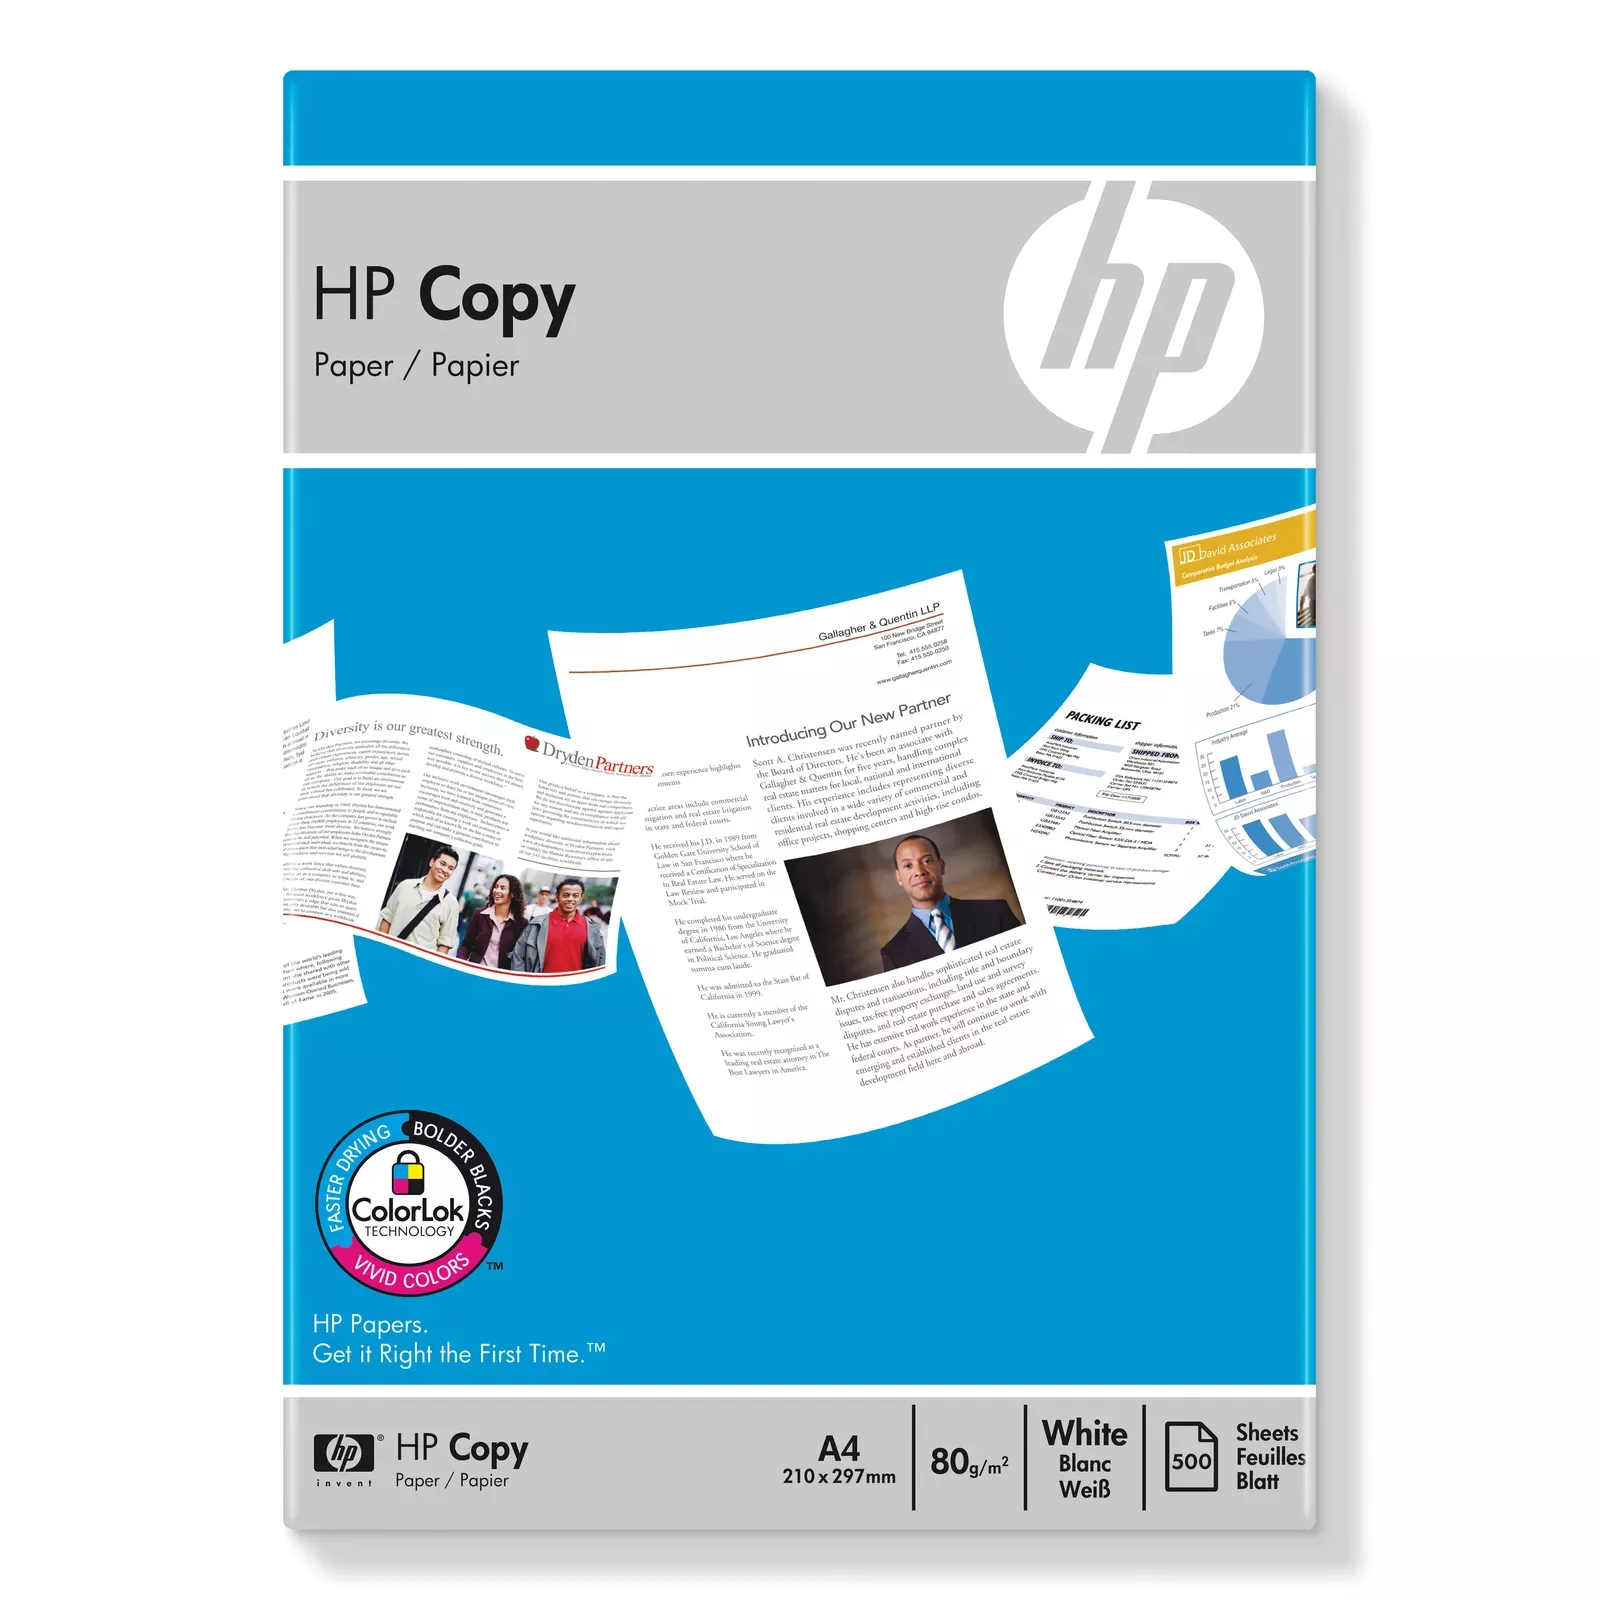 HP CHP910 Photo 1